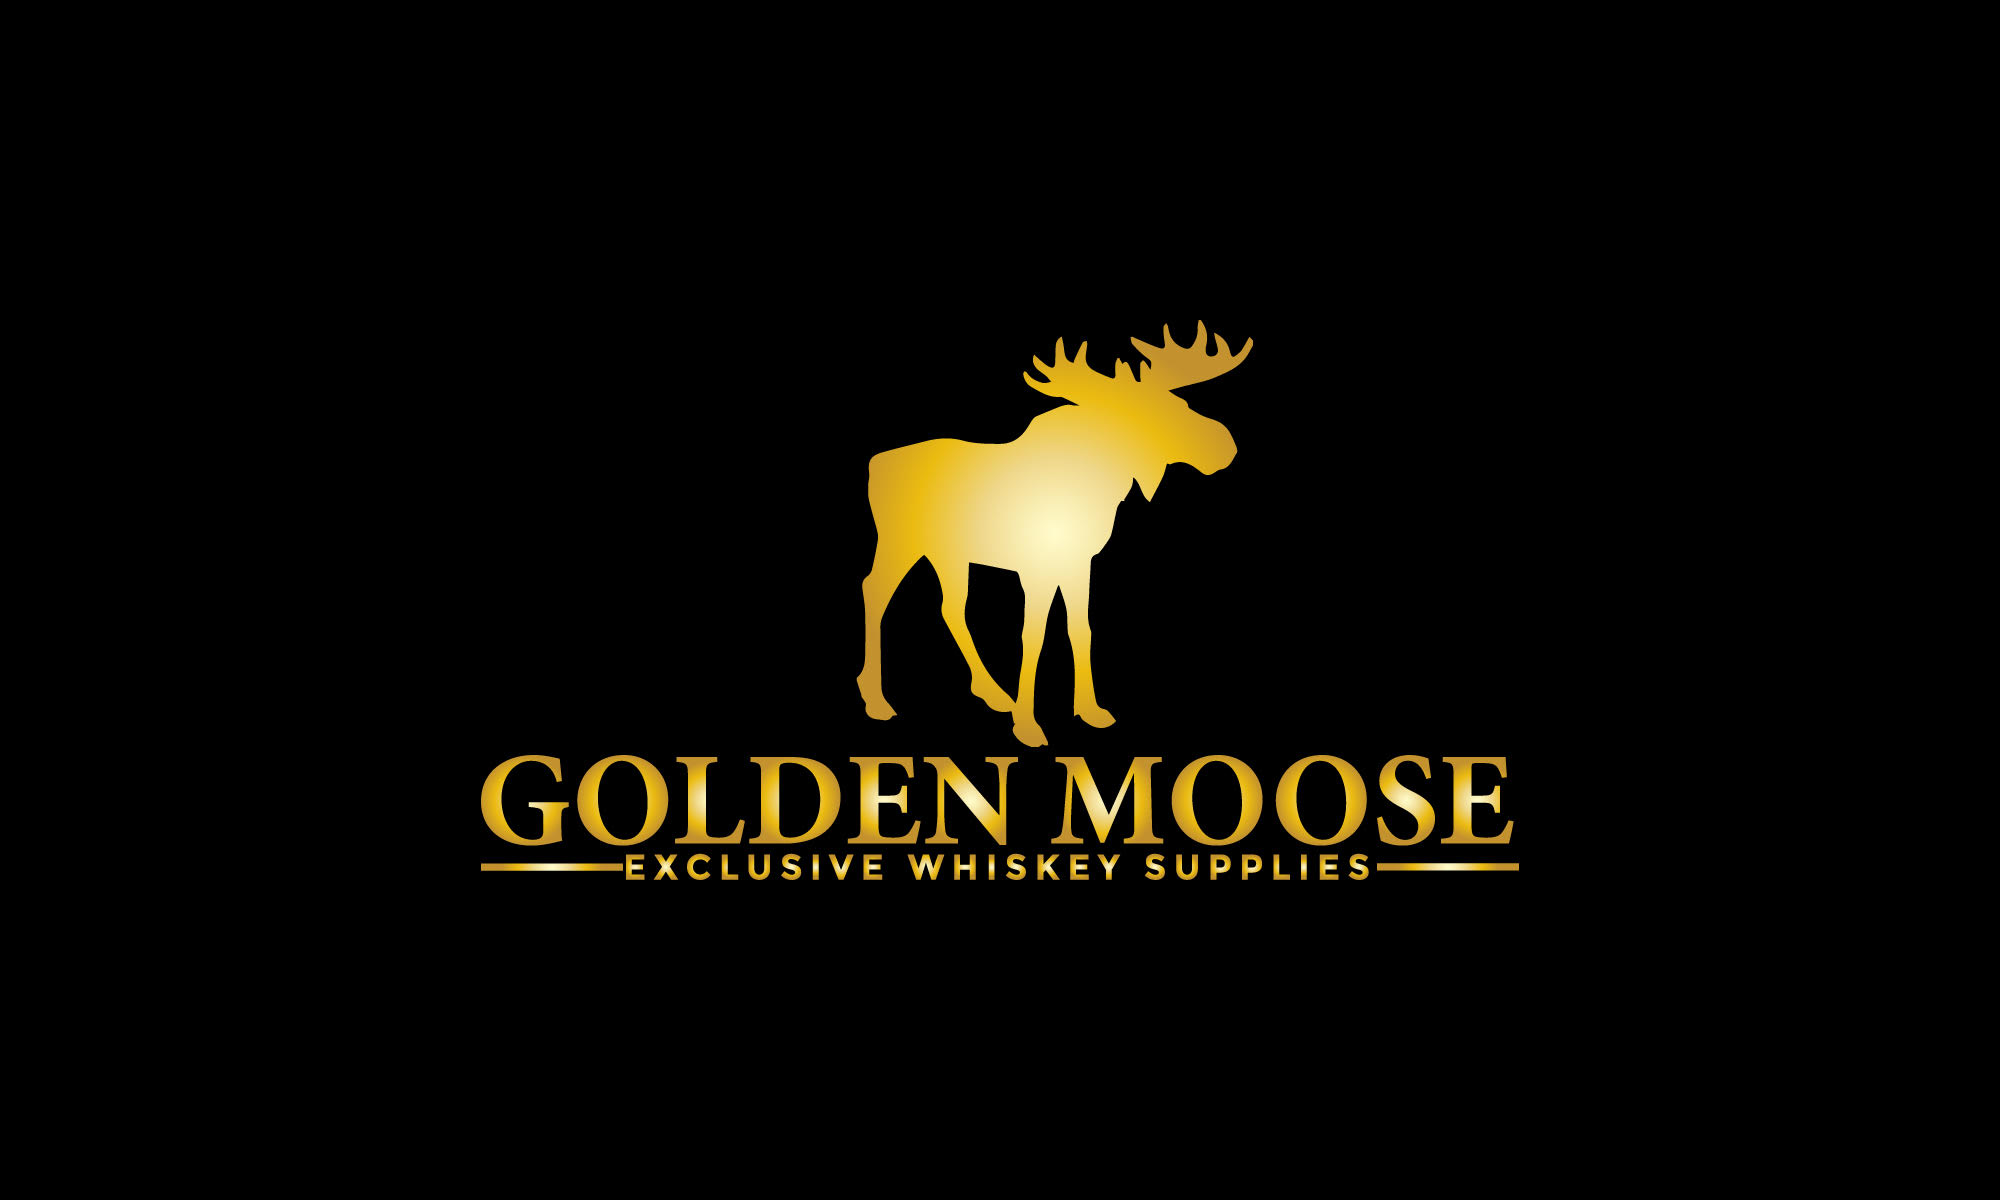 GOLDEN MOOSE EXCLUSIVE WHISKEY SUPPLIES